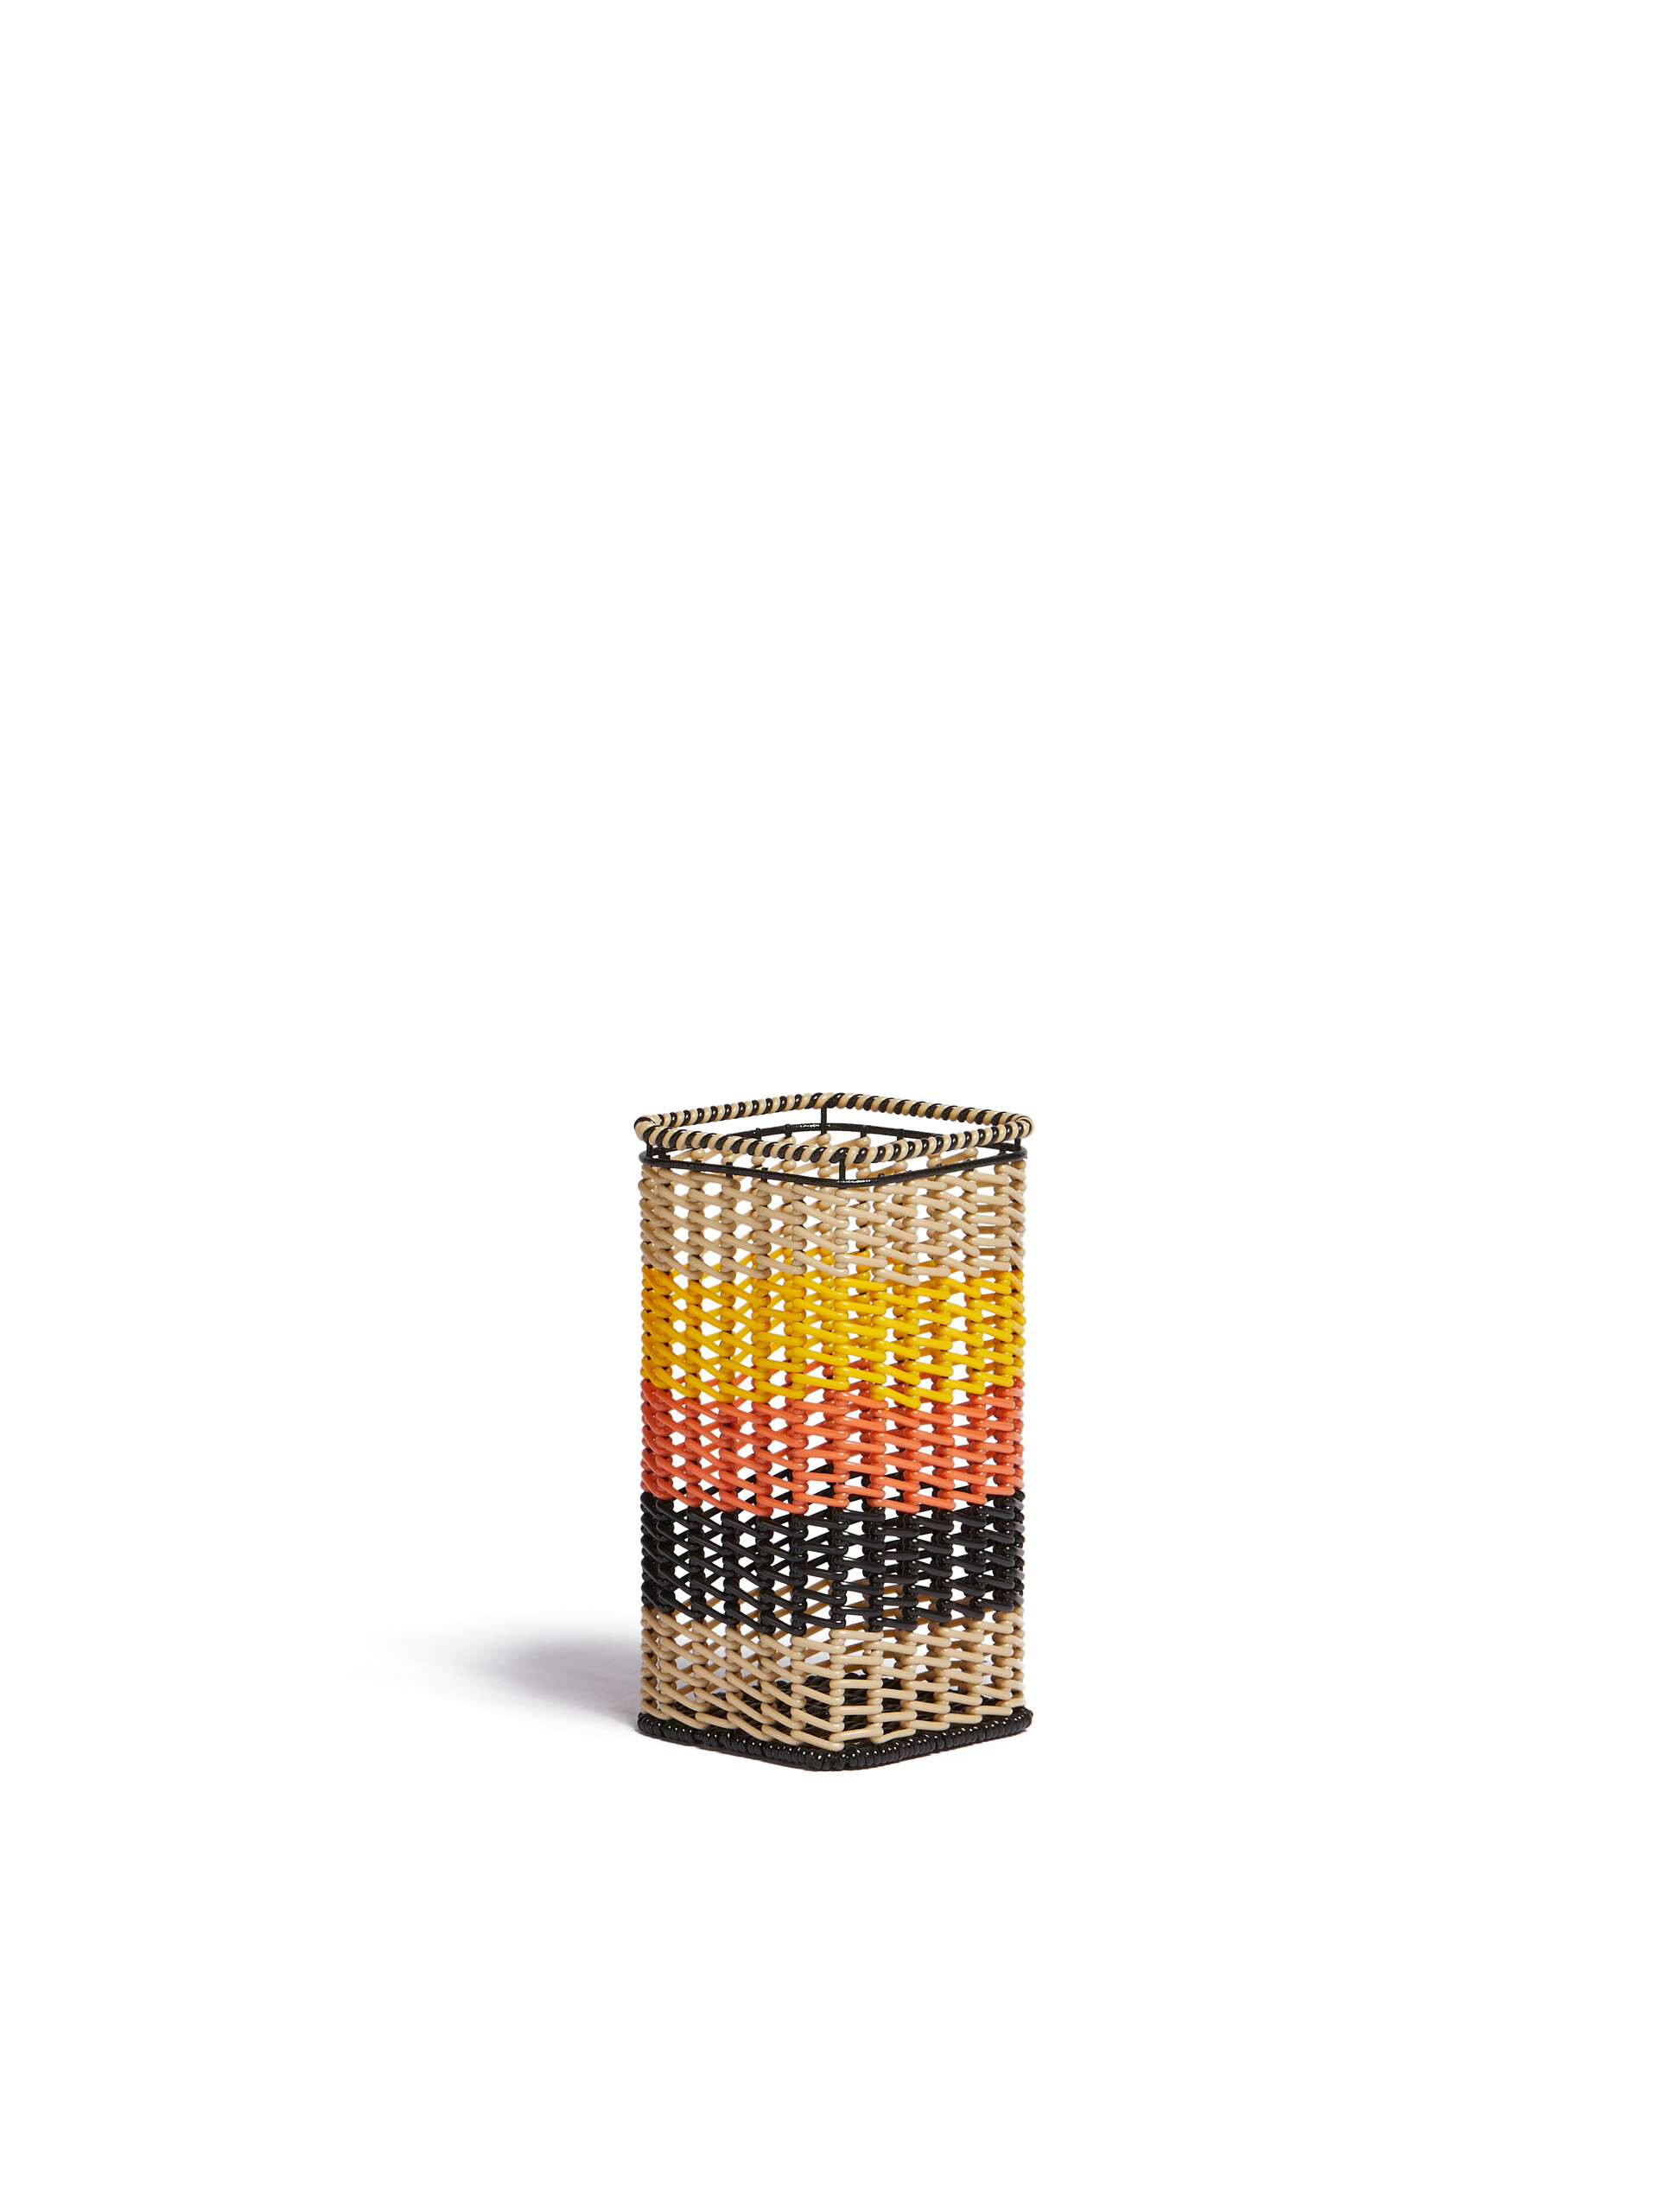 Multicoloured MARNI MARKET woven cable cutlery holder - Accessories - Image 2